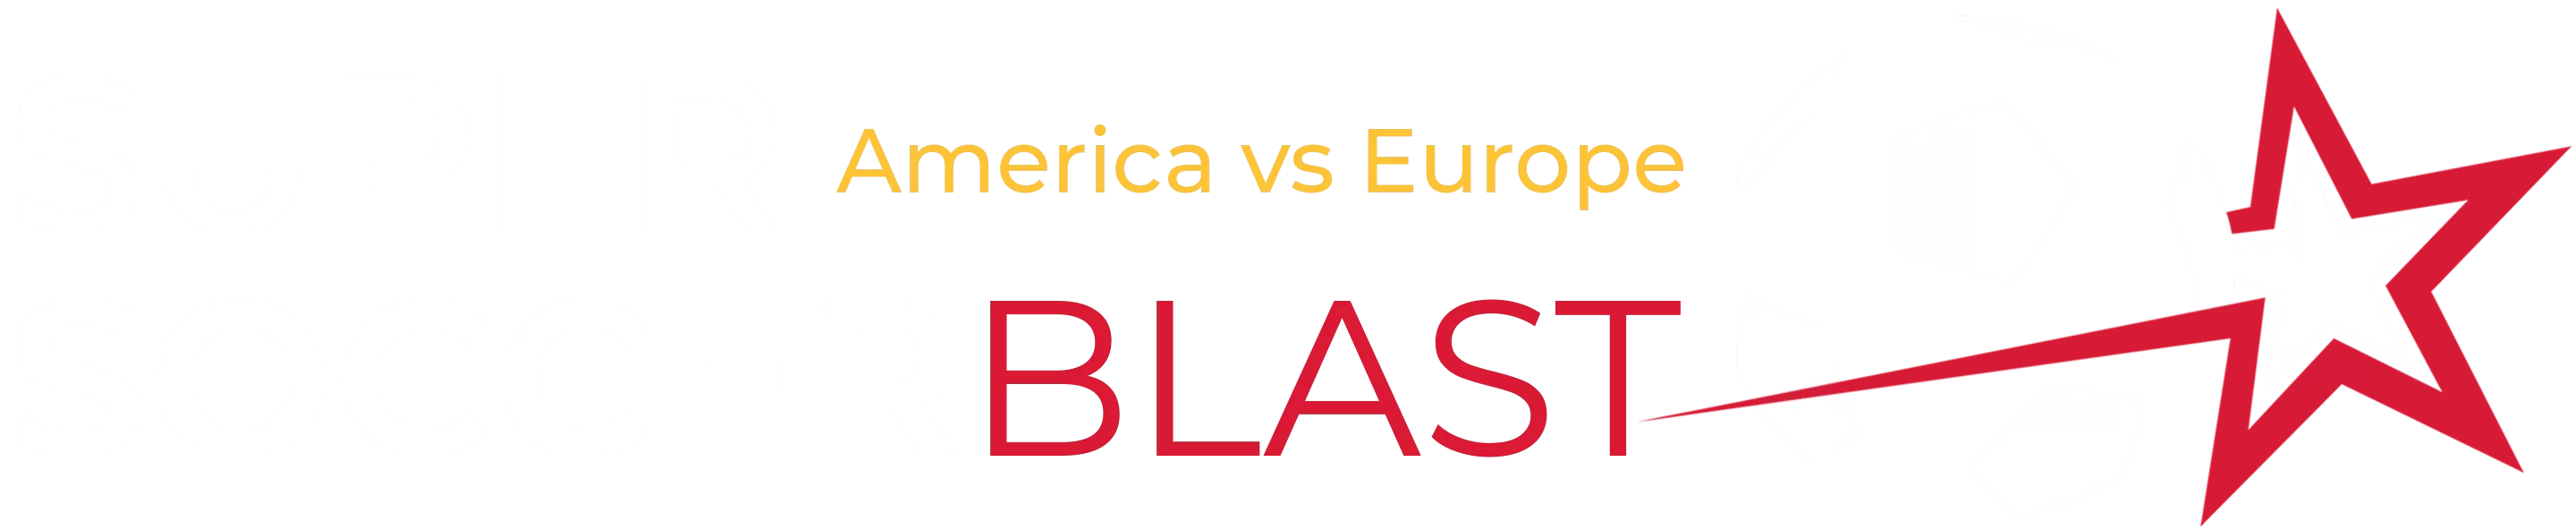 Super Soccer Blast - America vs Europe